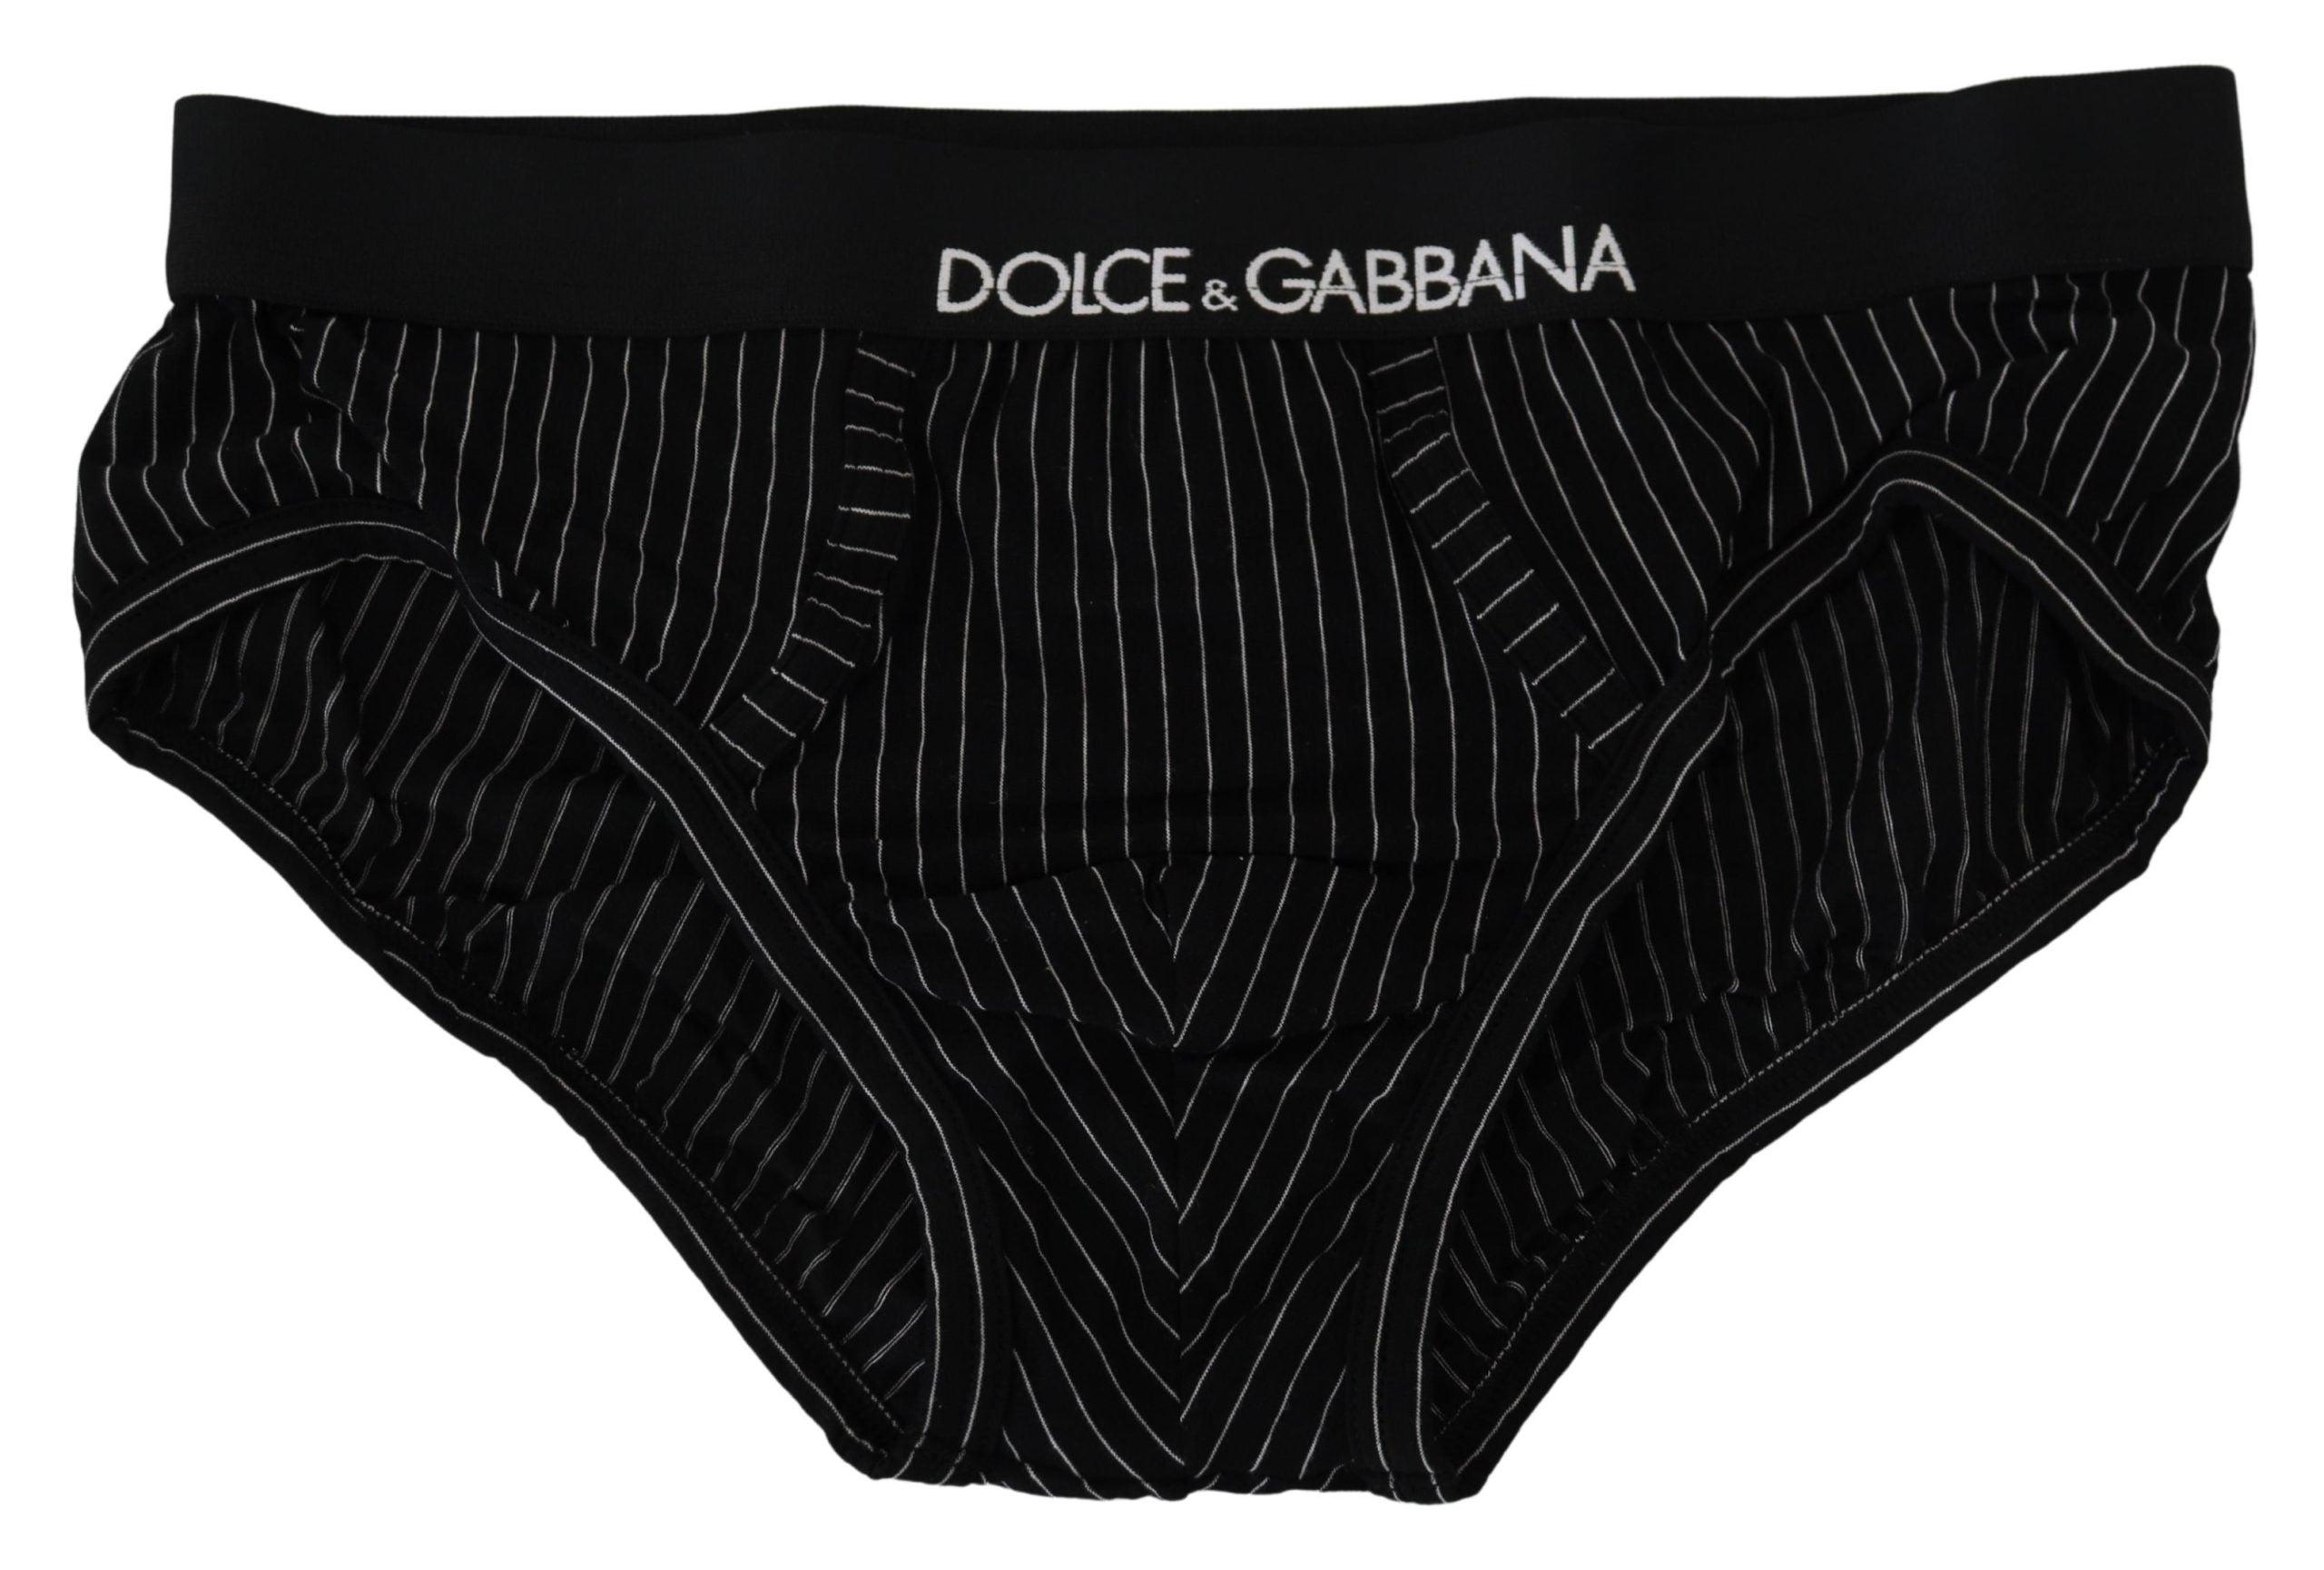 https://cdna.lystit.com/photos/seymayka/b74a229c/dolce-gabbana--Black-Striped-Cotton-Brando-Brief-Underwear.jpeg